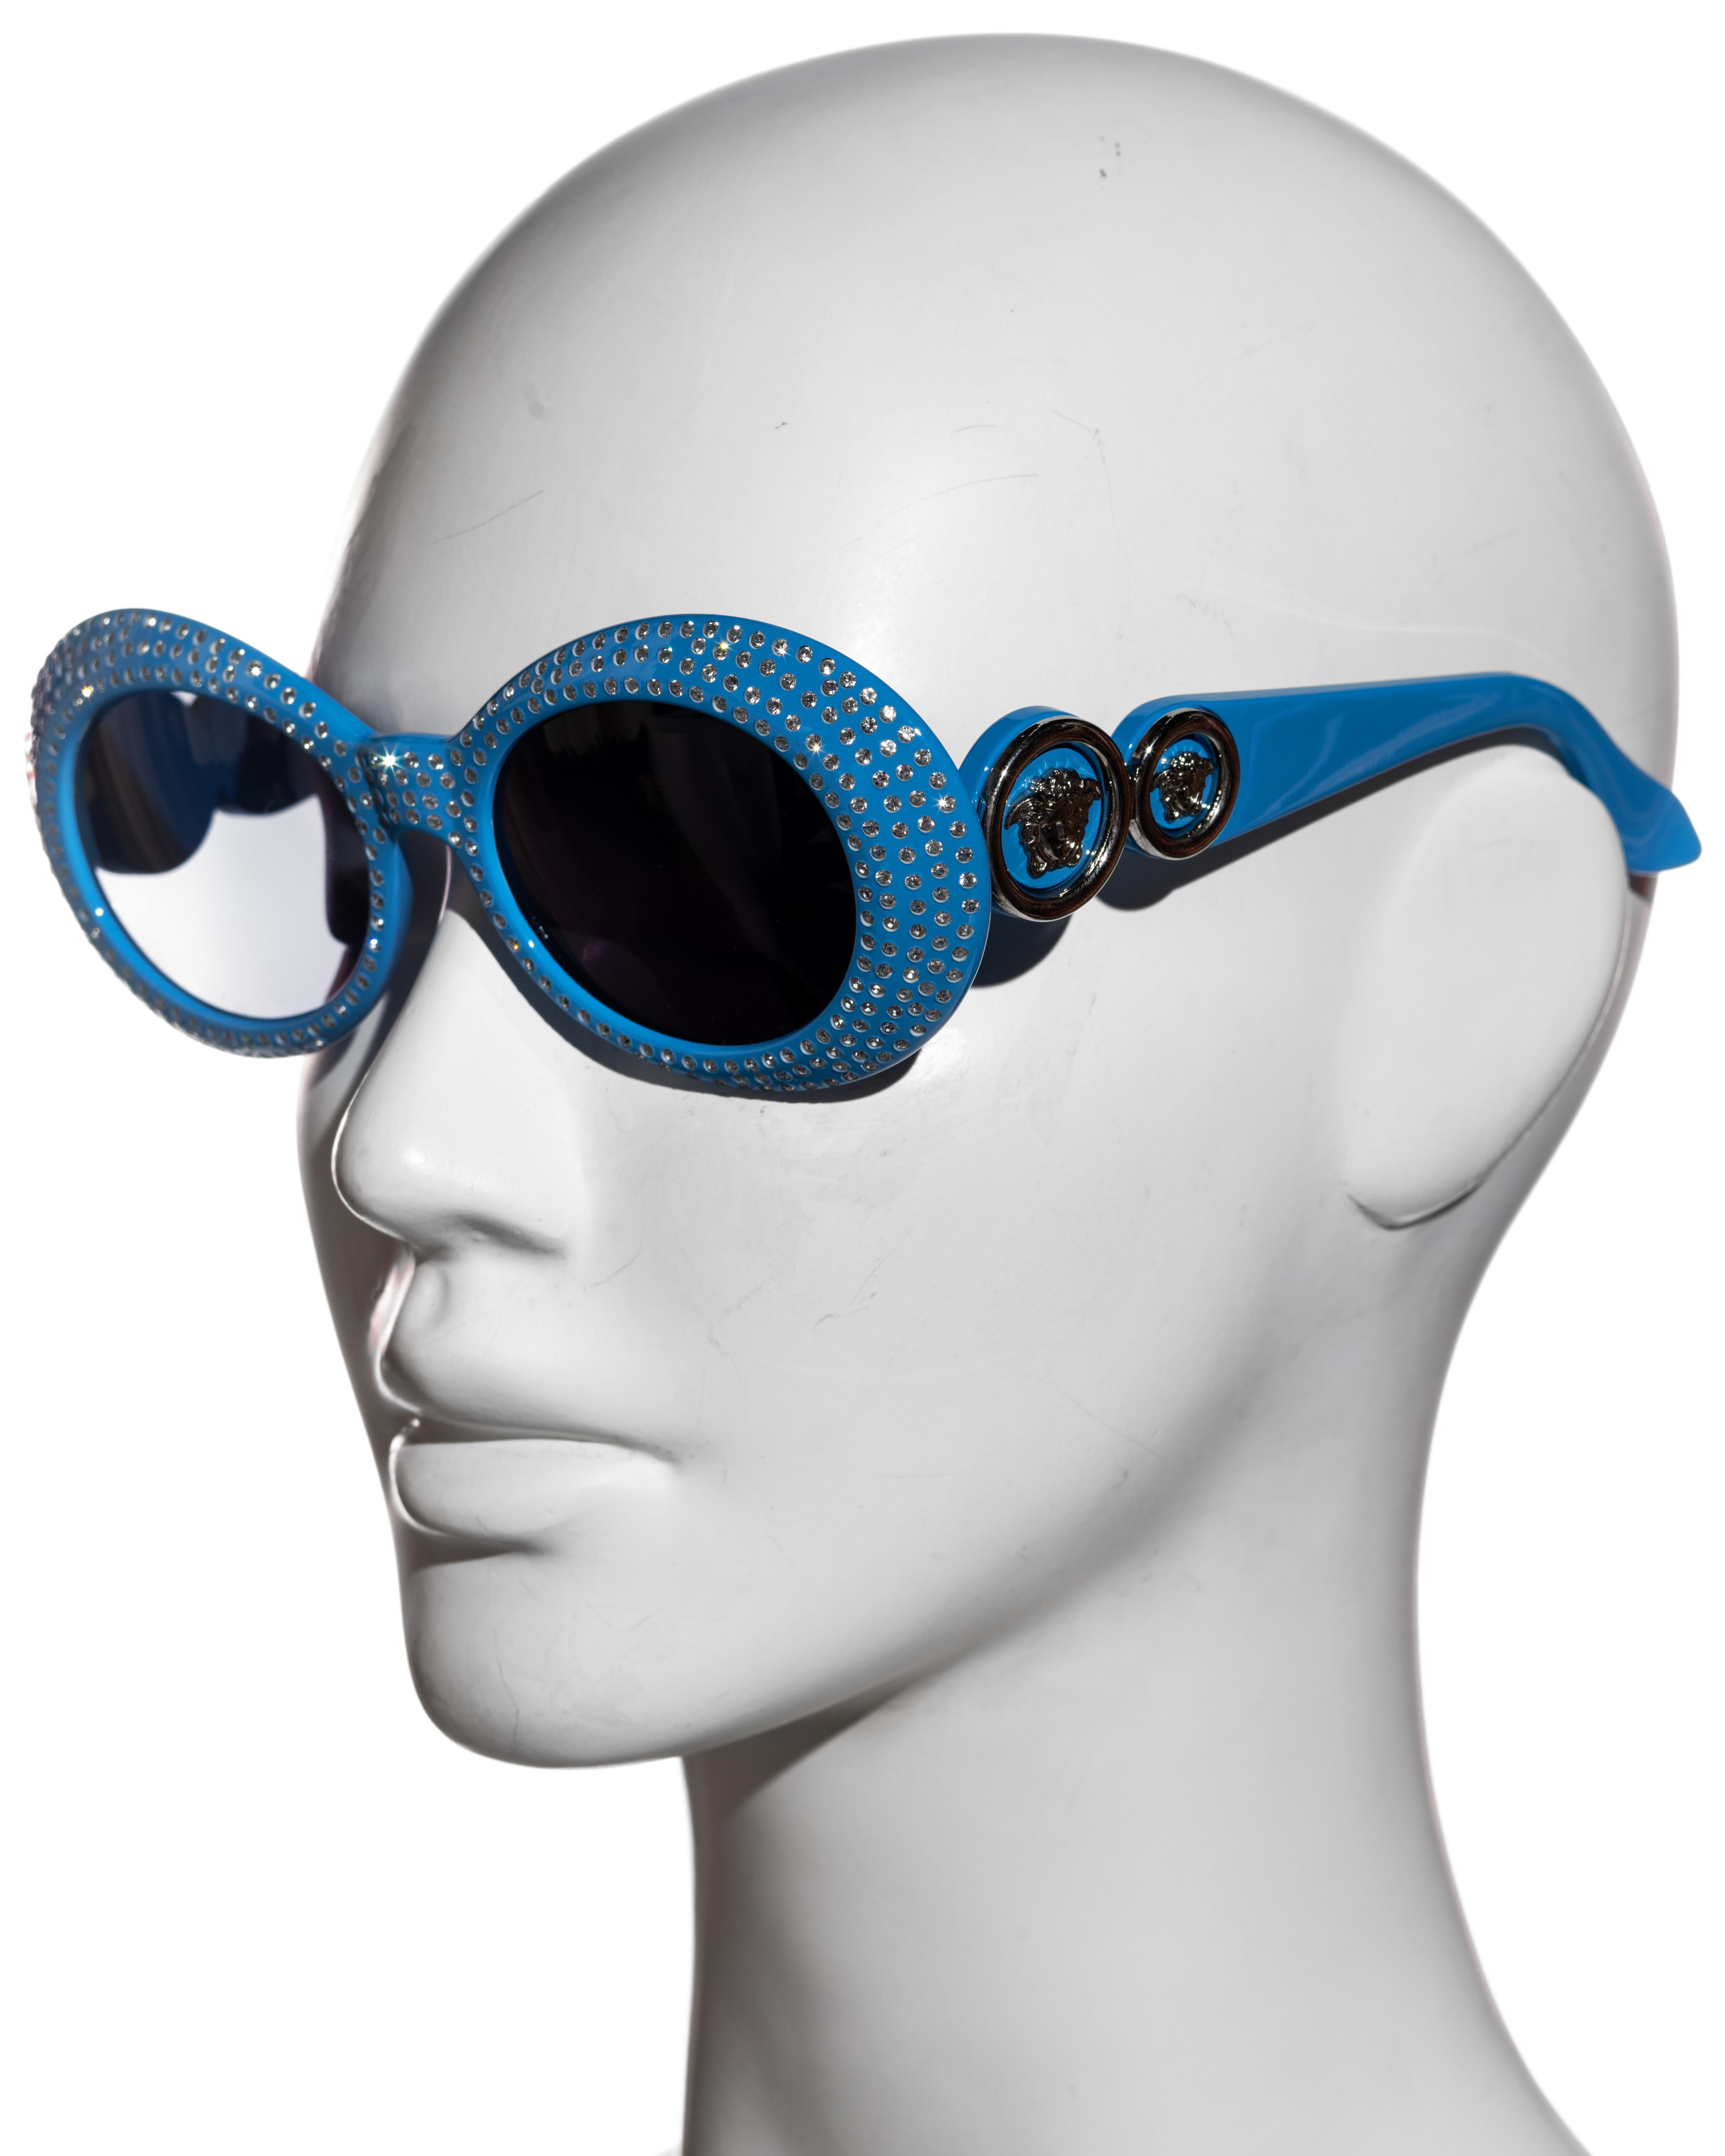 Gianni Versace unisex blue rhinestone sunglasses, fw 1996 1